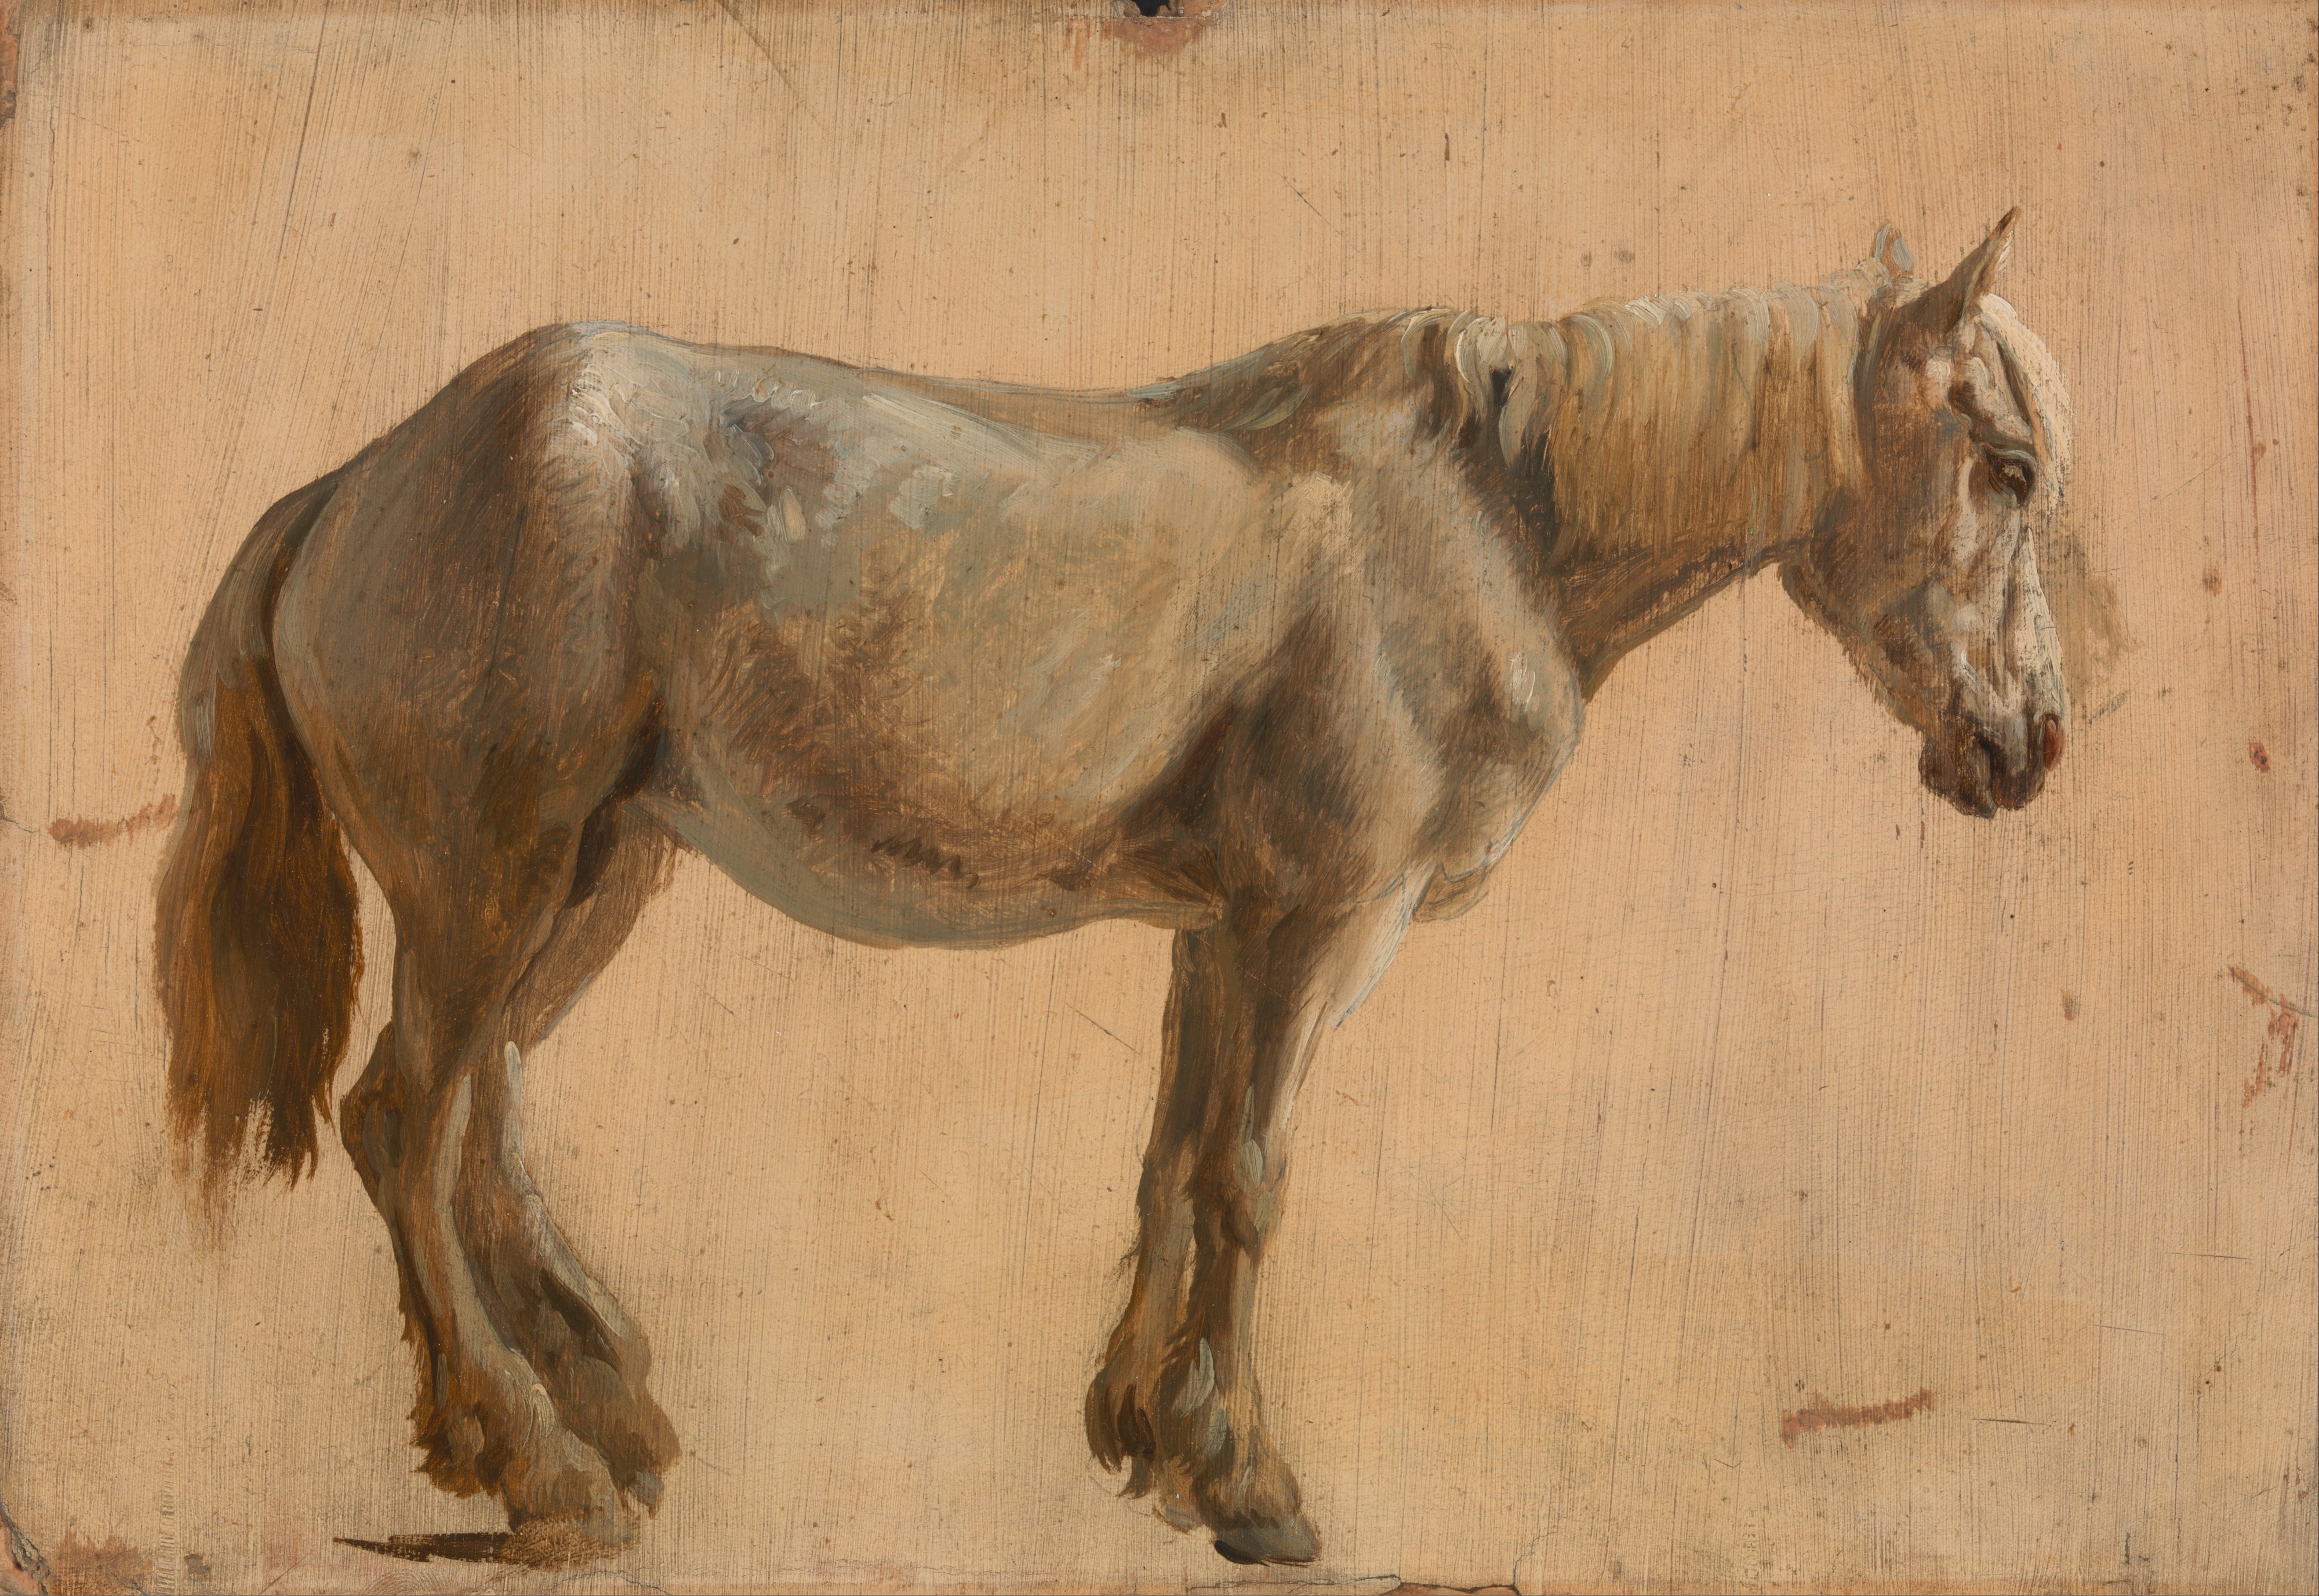 Jacques-Laurent Agasse - Study of a Grey Horse - Google Art Project